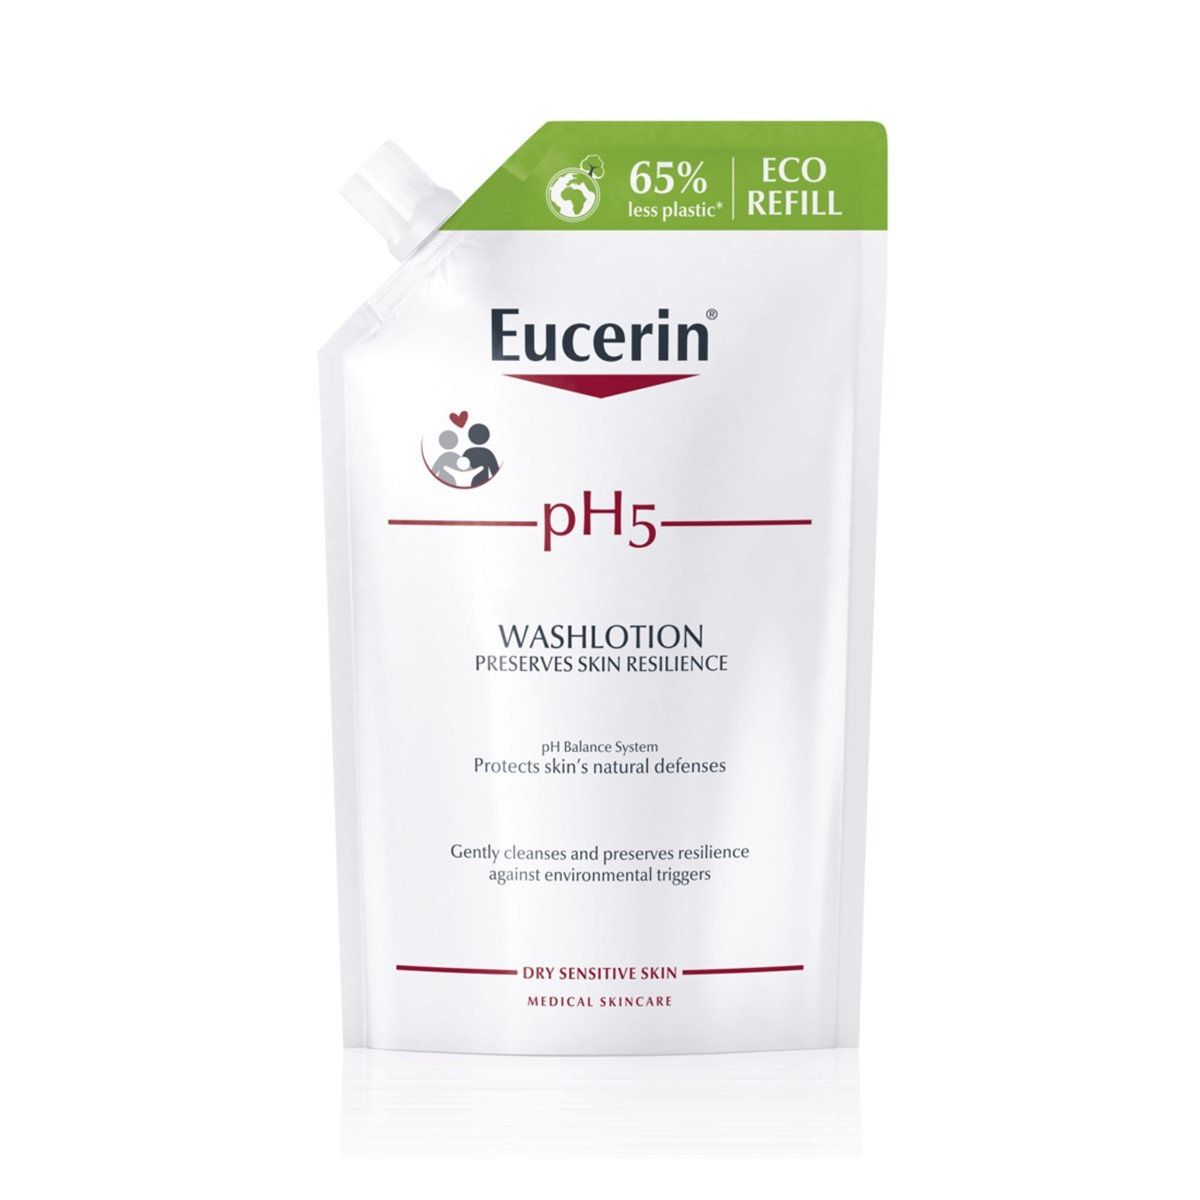 eucerin ph5 eco refill washlotion 400ml